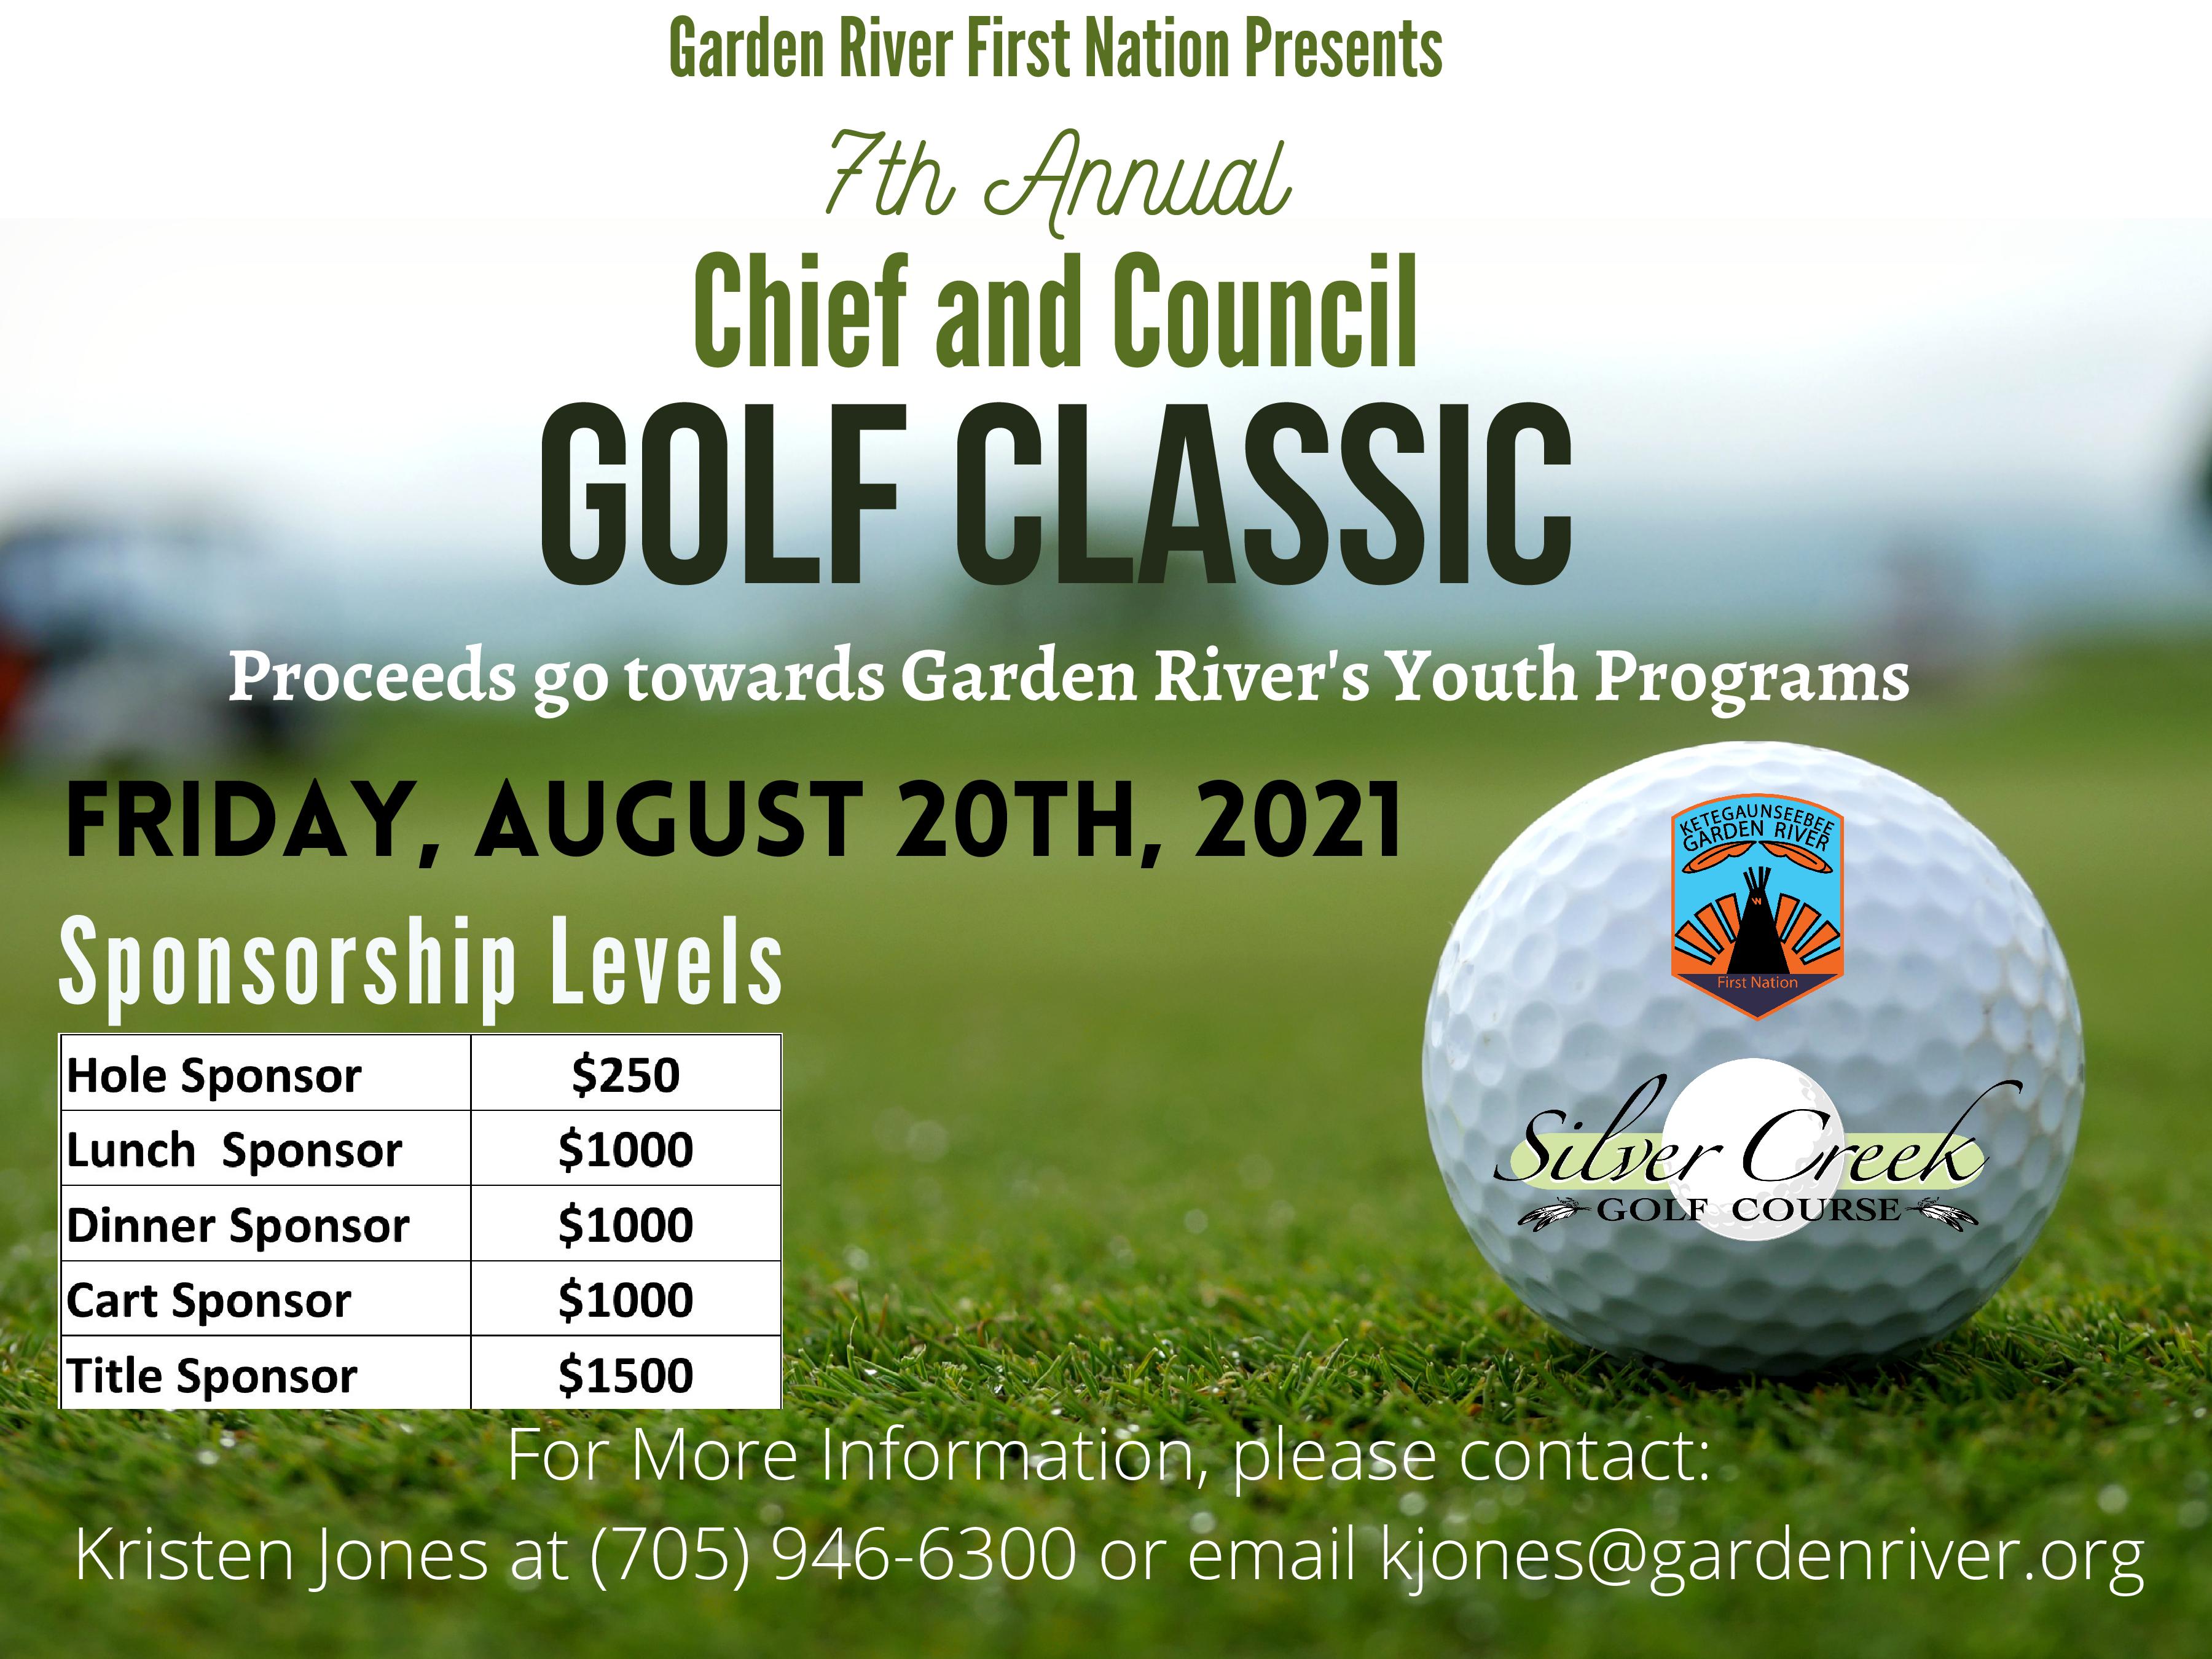 GRFN 7th Annual Golf Classic *Sponsorship Poster*